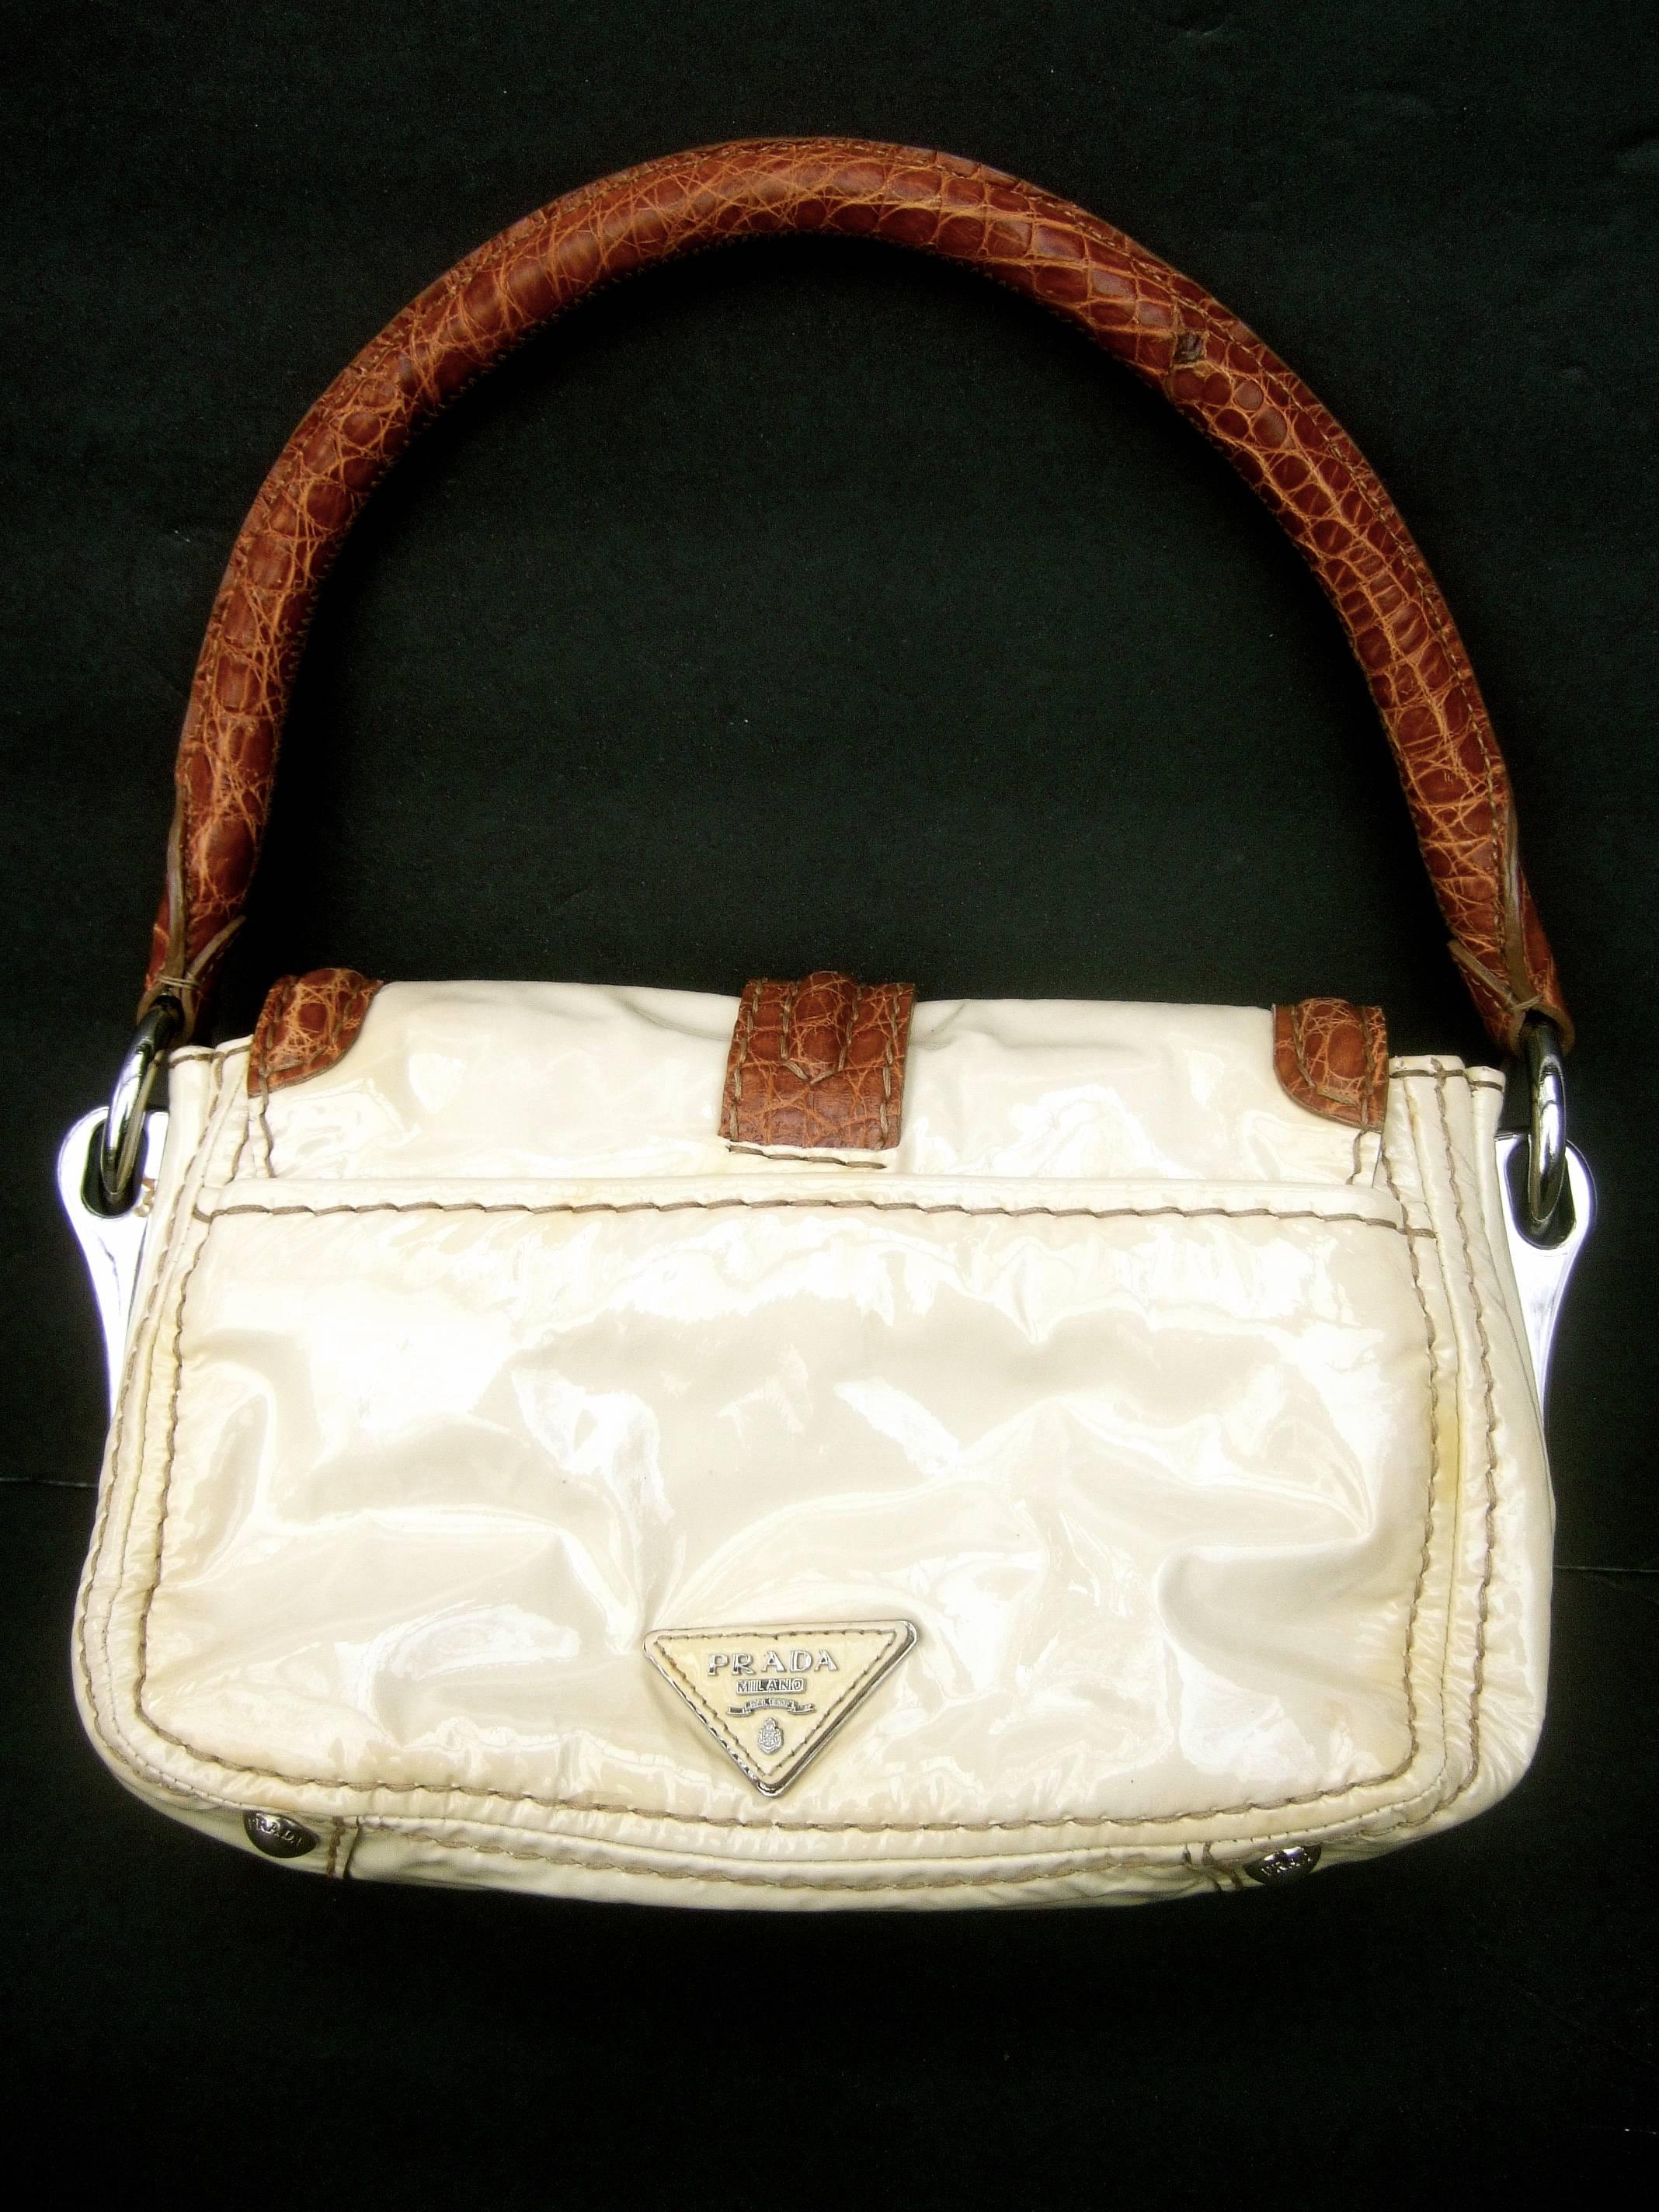 Women's Prada Milano Tan Patent Leather Embossed Trim Handbag, circa 1990s